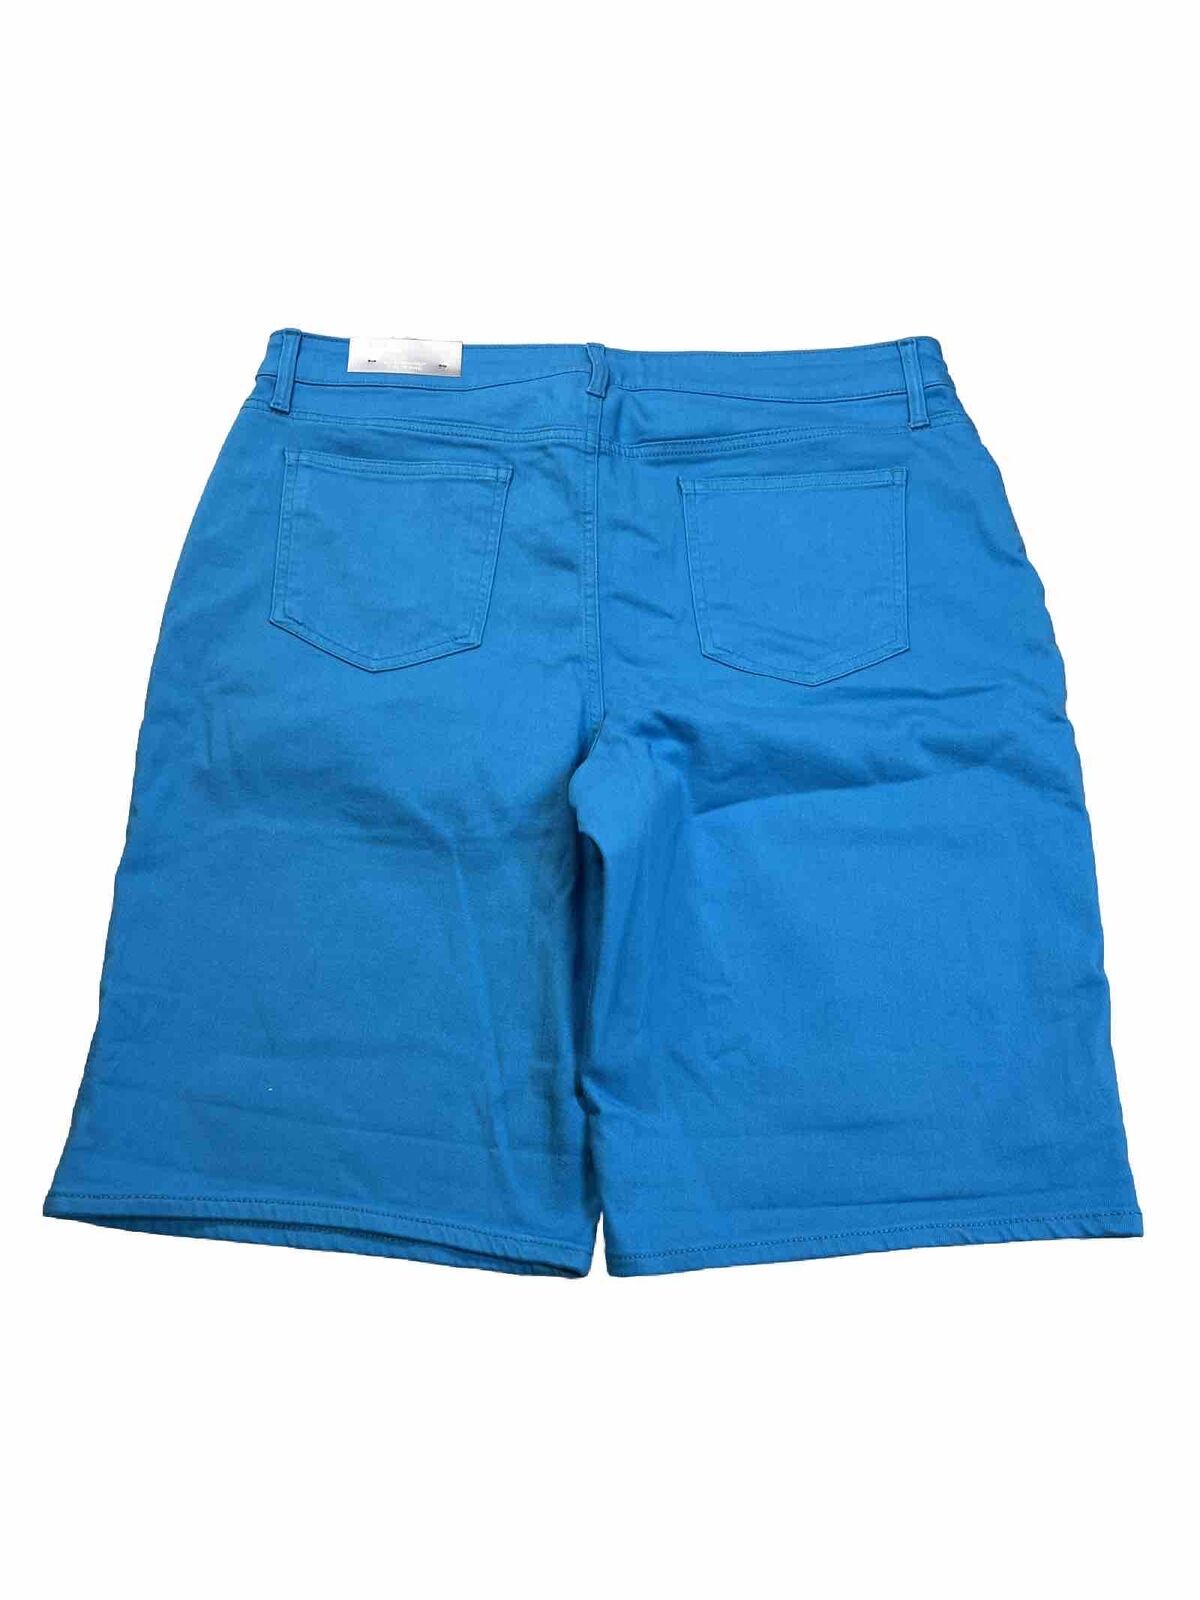 NEW Chico's Women's Blue So Slimming Girlfriend Shorts - 2.5/ 14